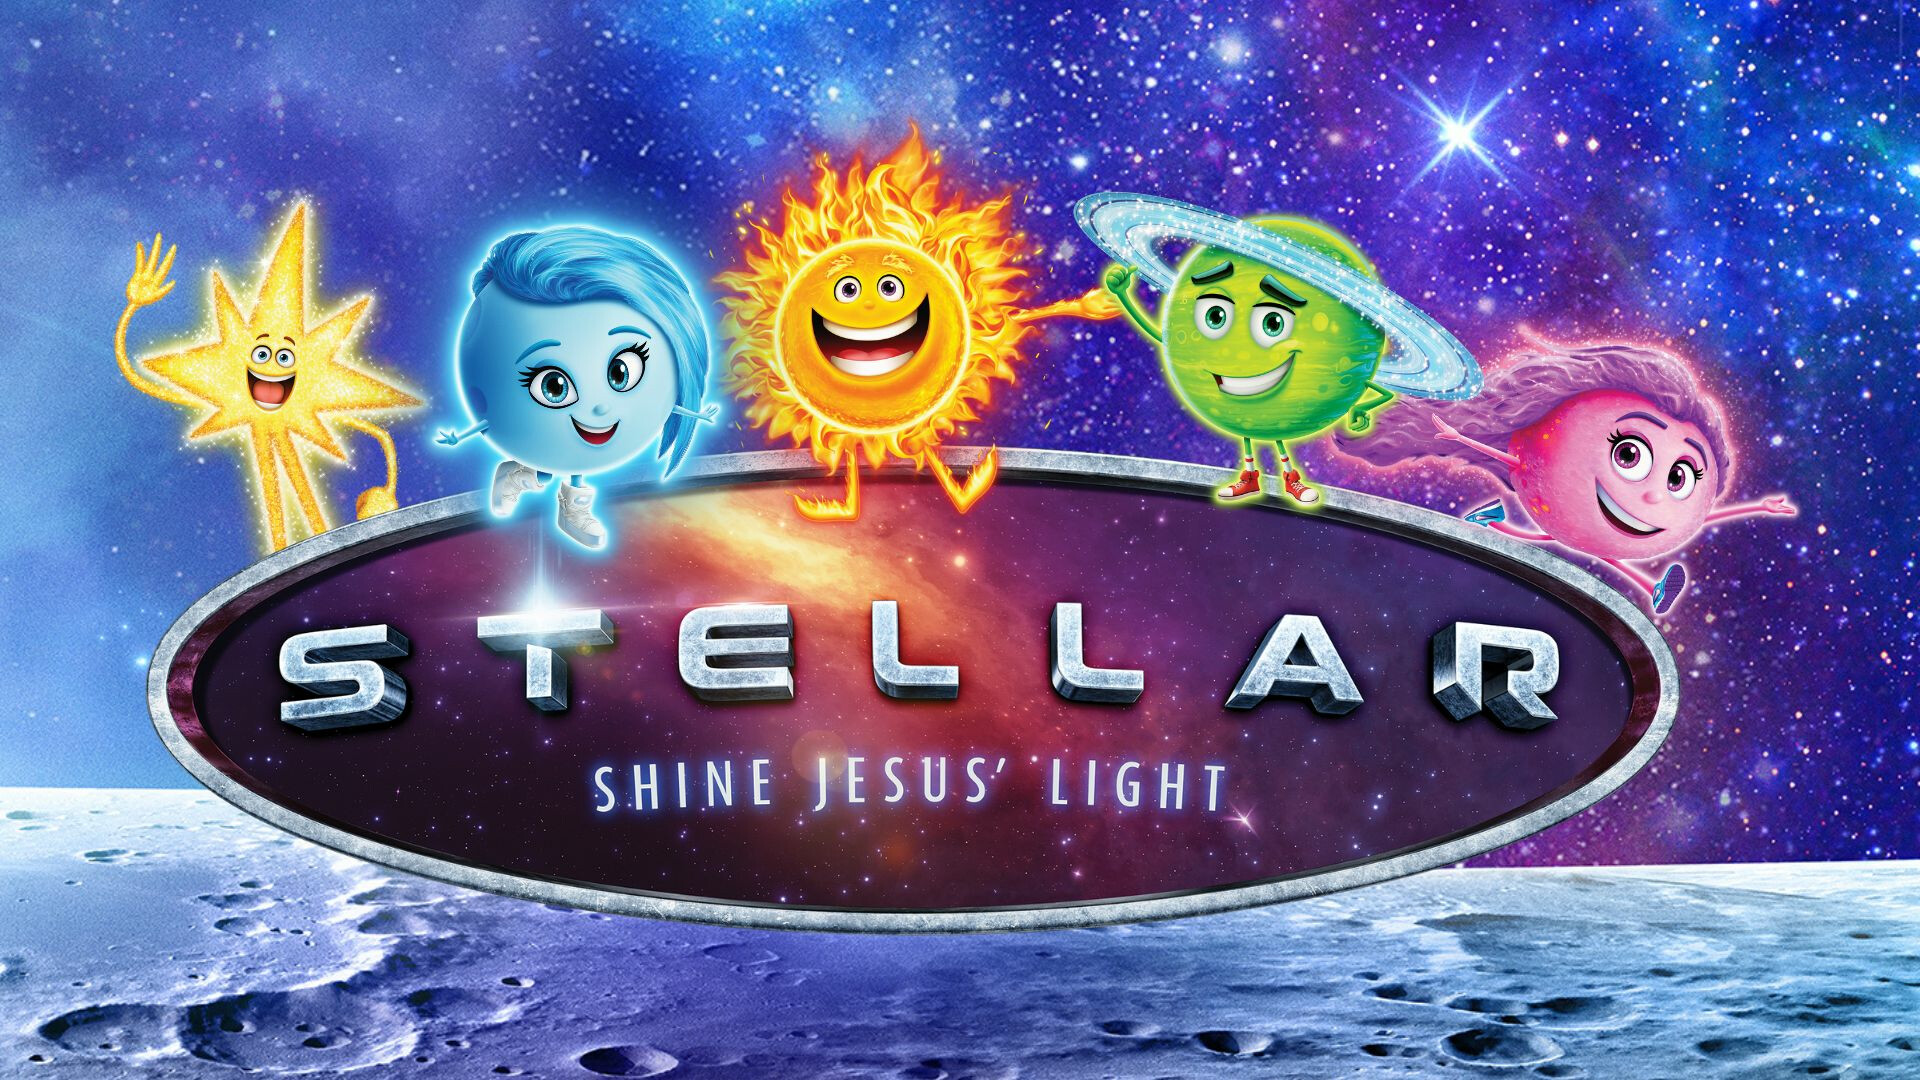 Stellar: Shine Jesus' Light